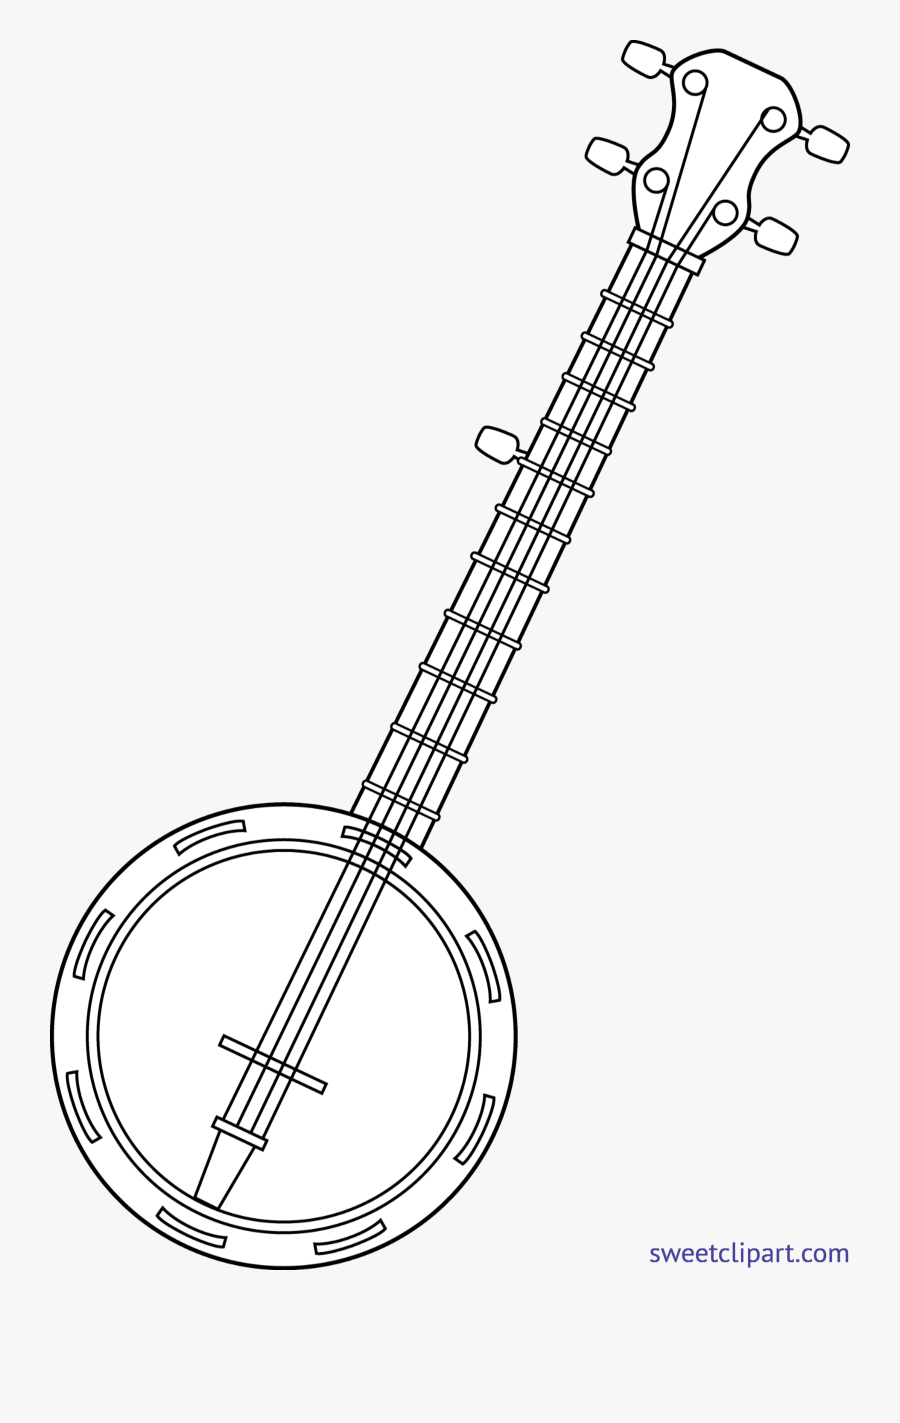 Lineart Clip Art Sweet - Indian Musical Instruments, Transparent Clipart